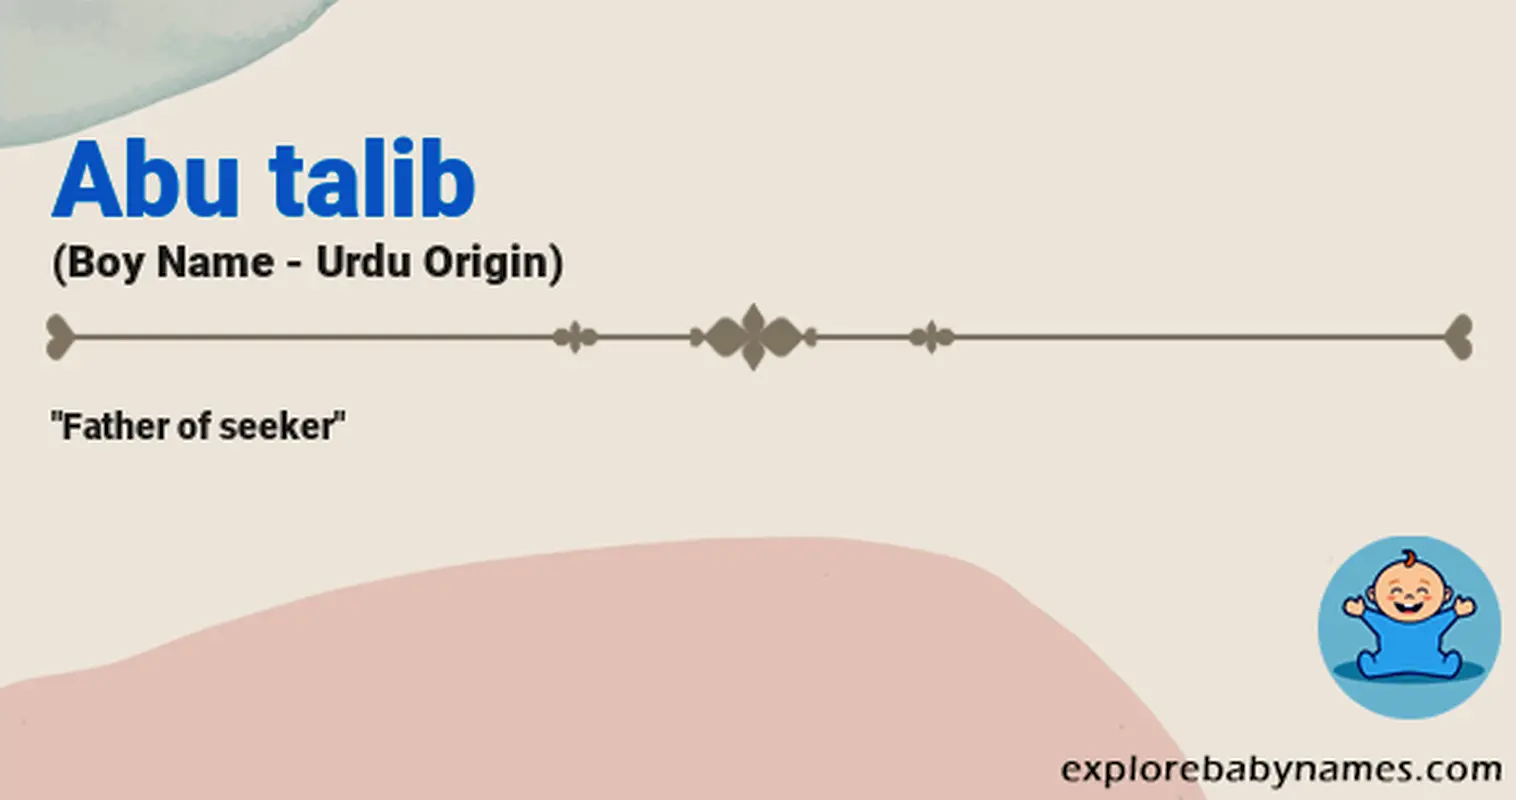 Meaning of Abu talib